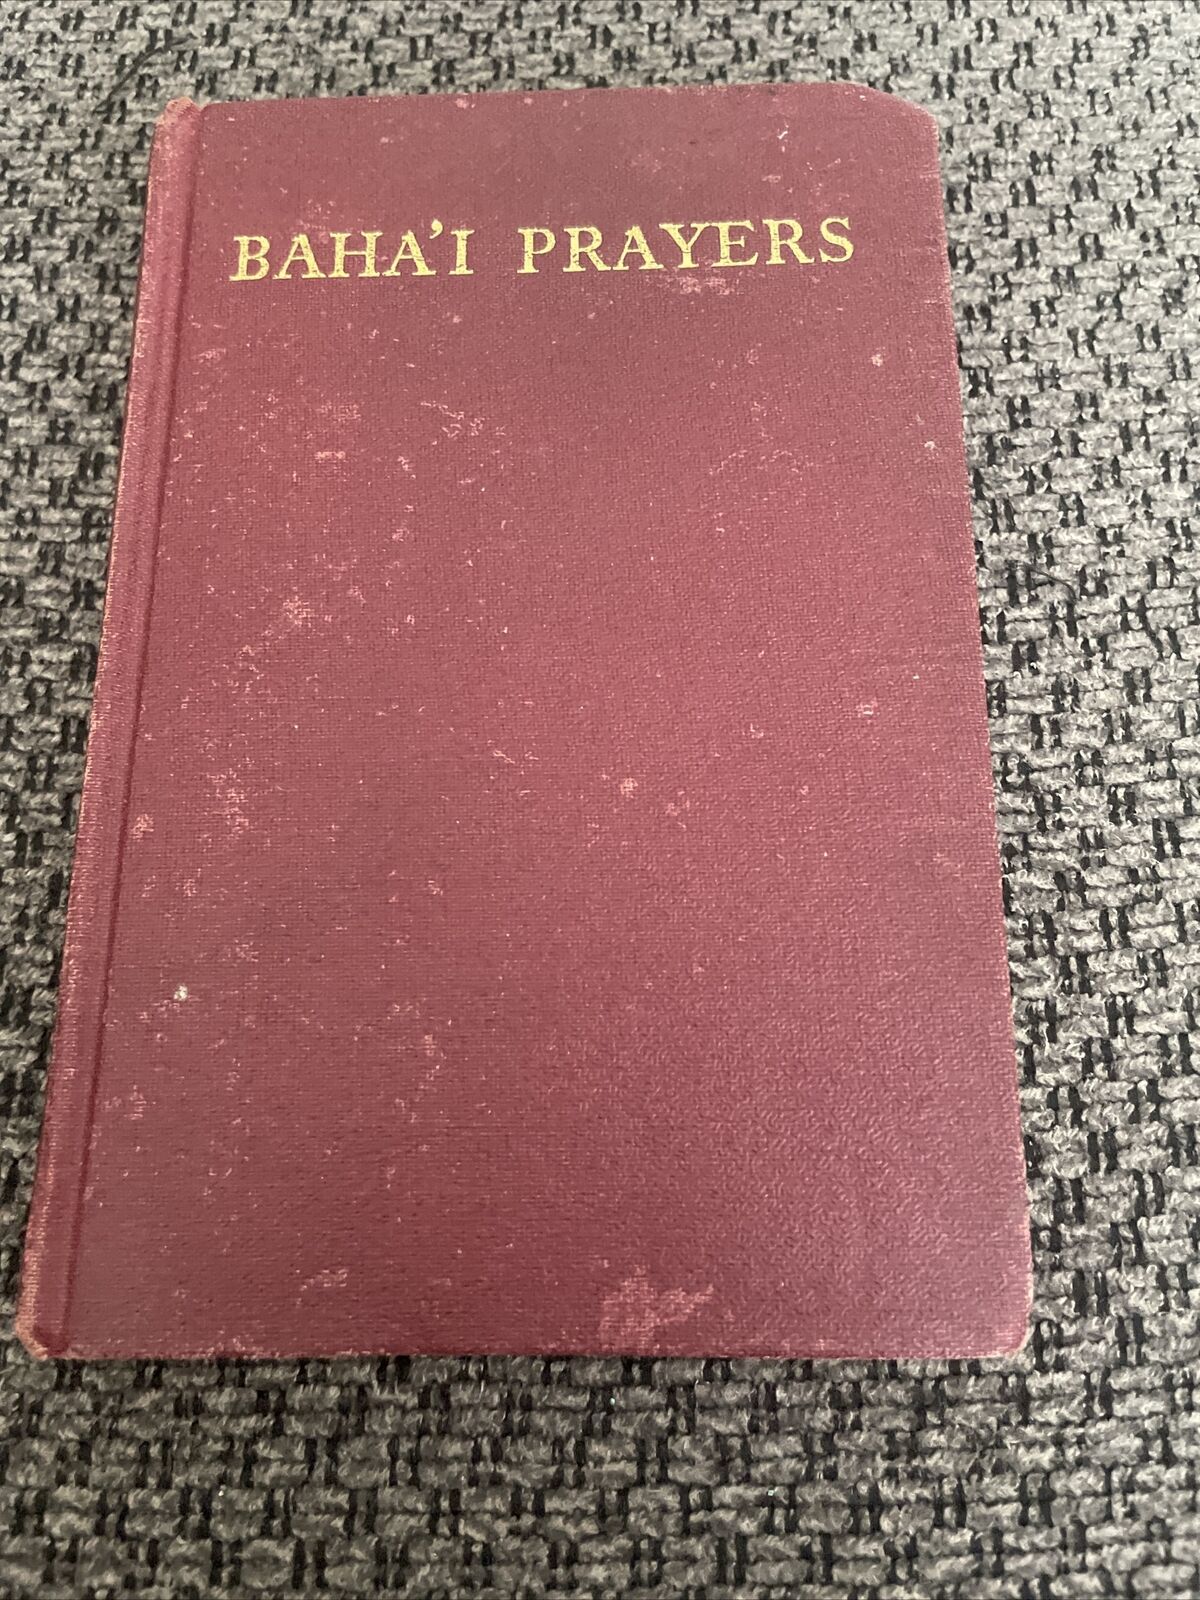 BAHAI PRAYERS BOOK 1945-1951- 1967 REVEALED BY BAHAULLAH, THE BAB AND ABDUL-BAHA